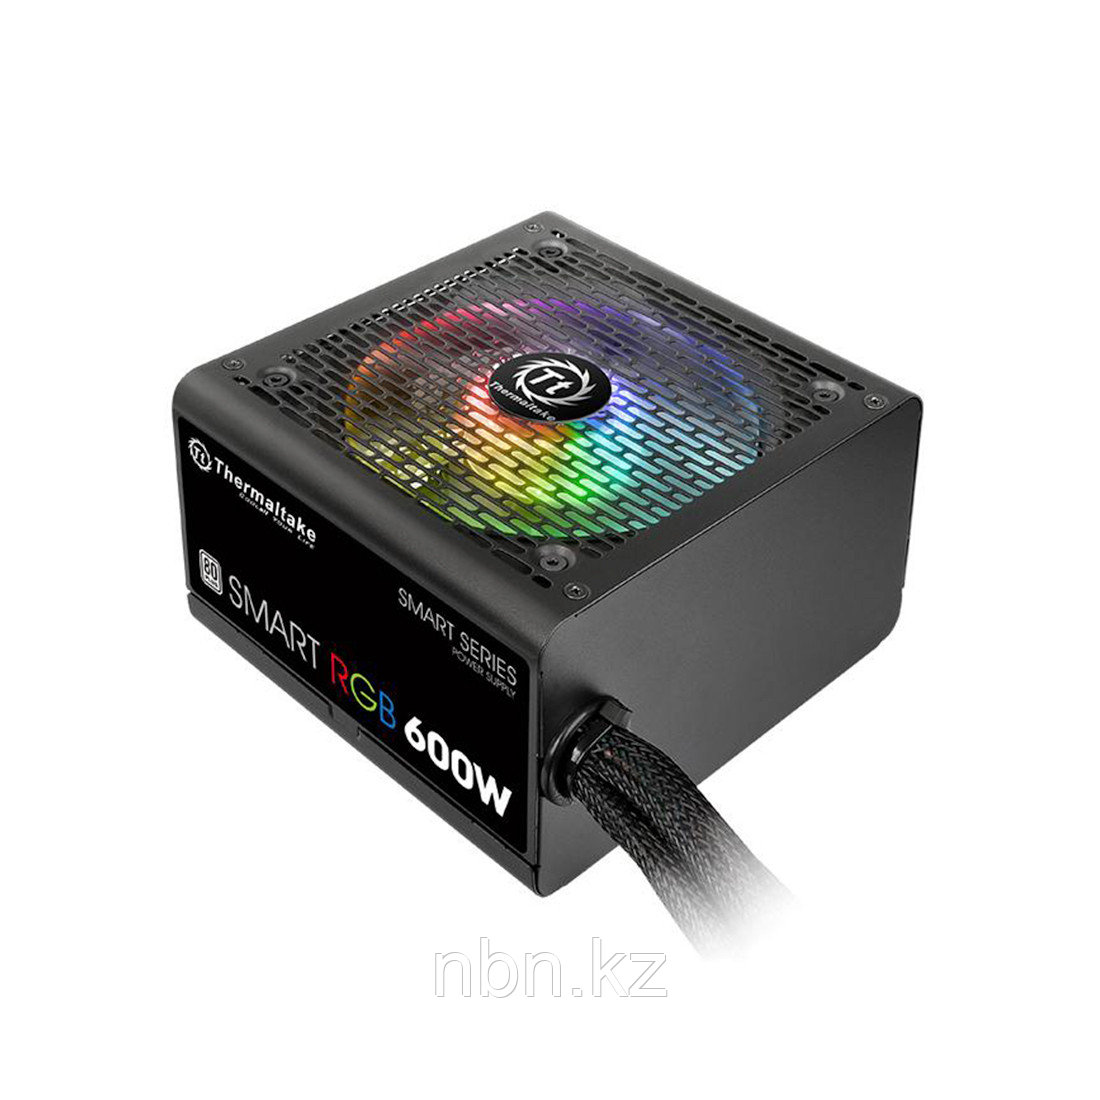 Блок питания Thermaltake Smart RGB 600W, фото 1